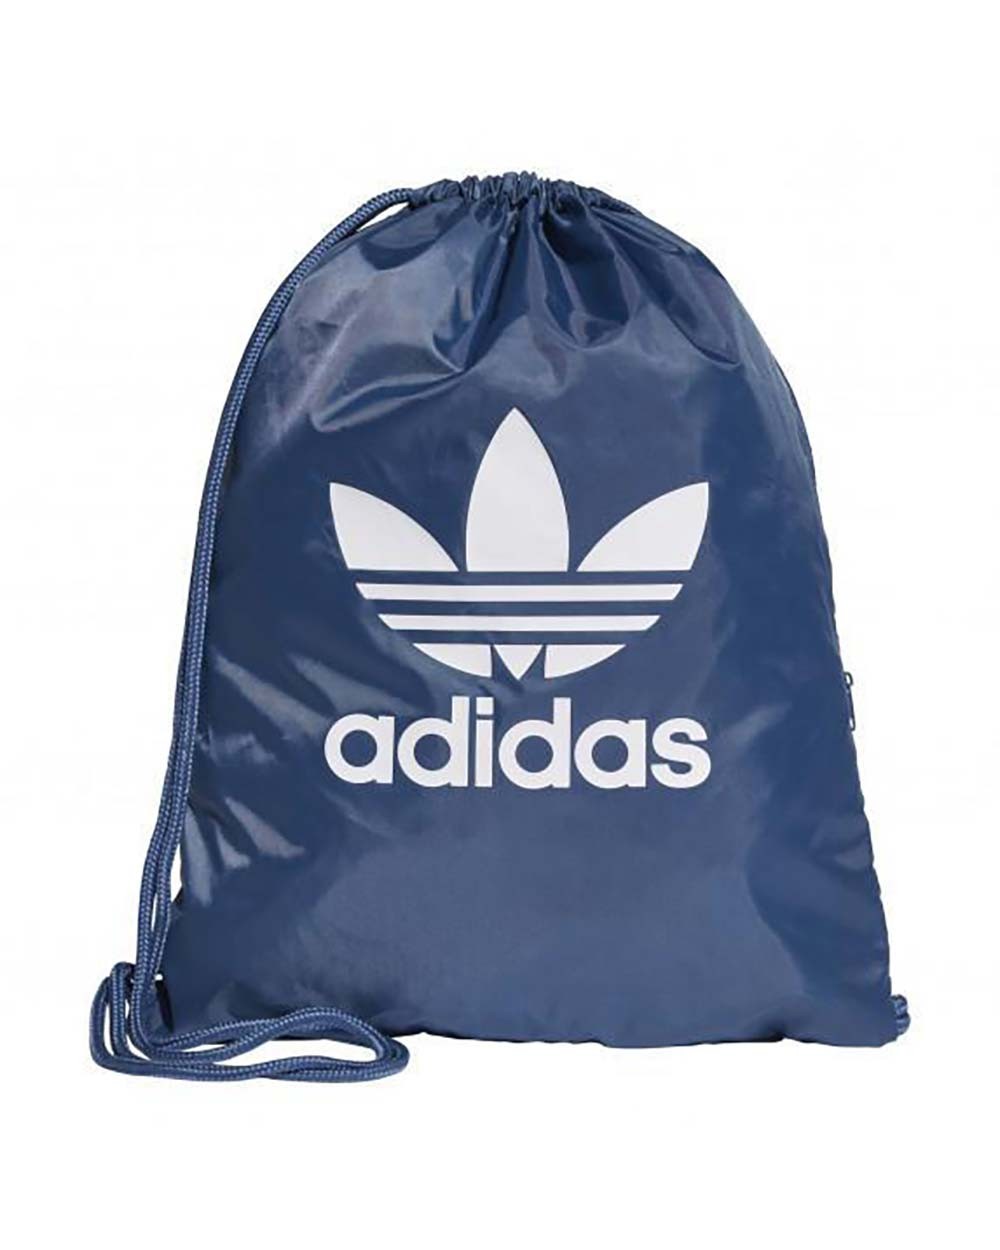 Adidas drawstring backpack - Gem